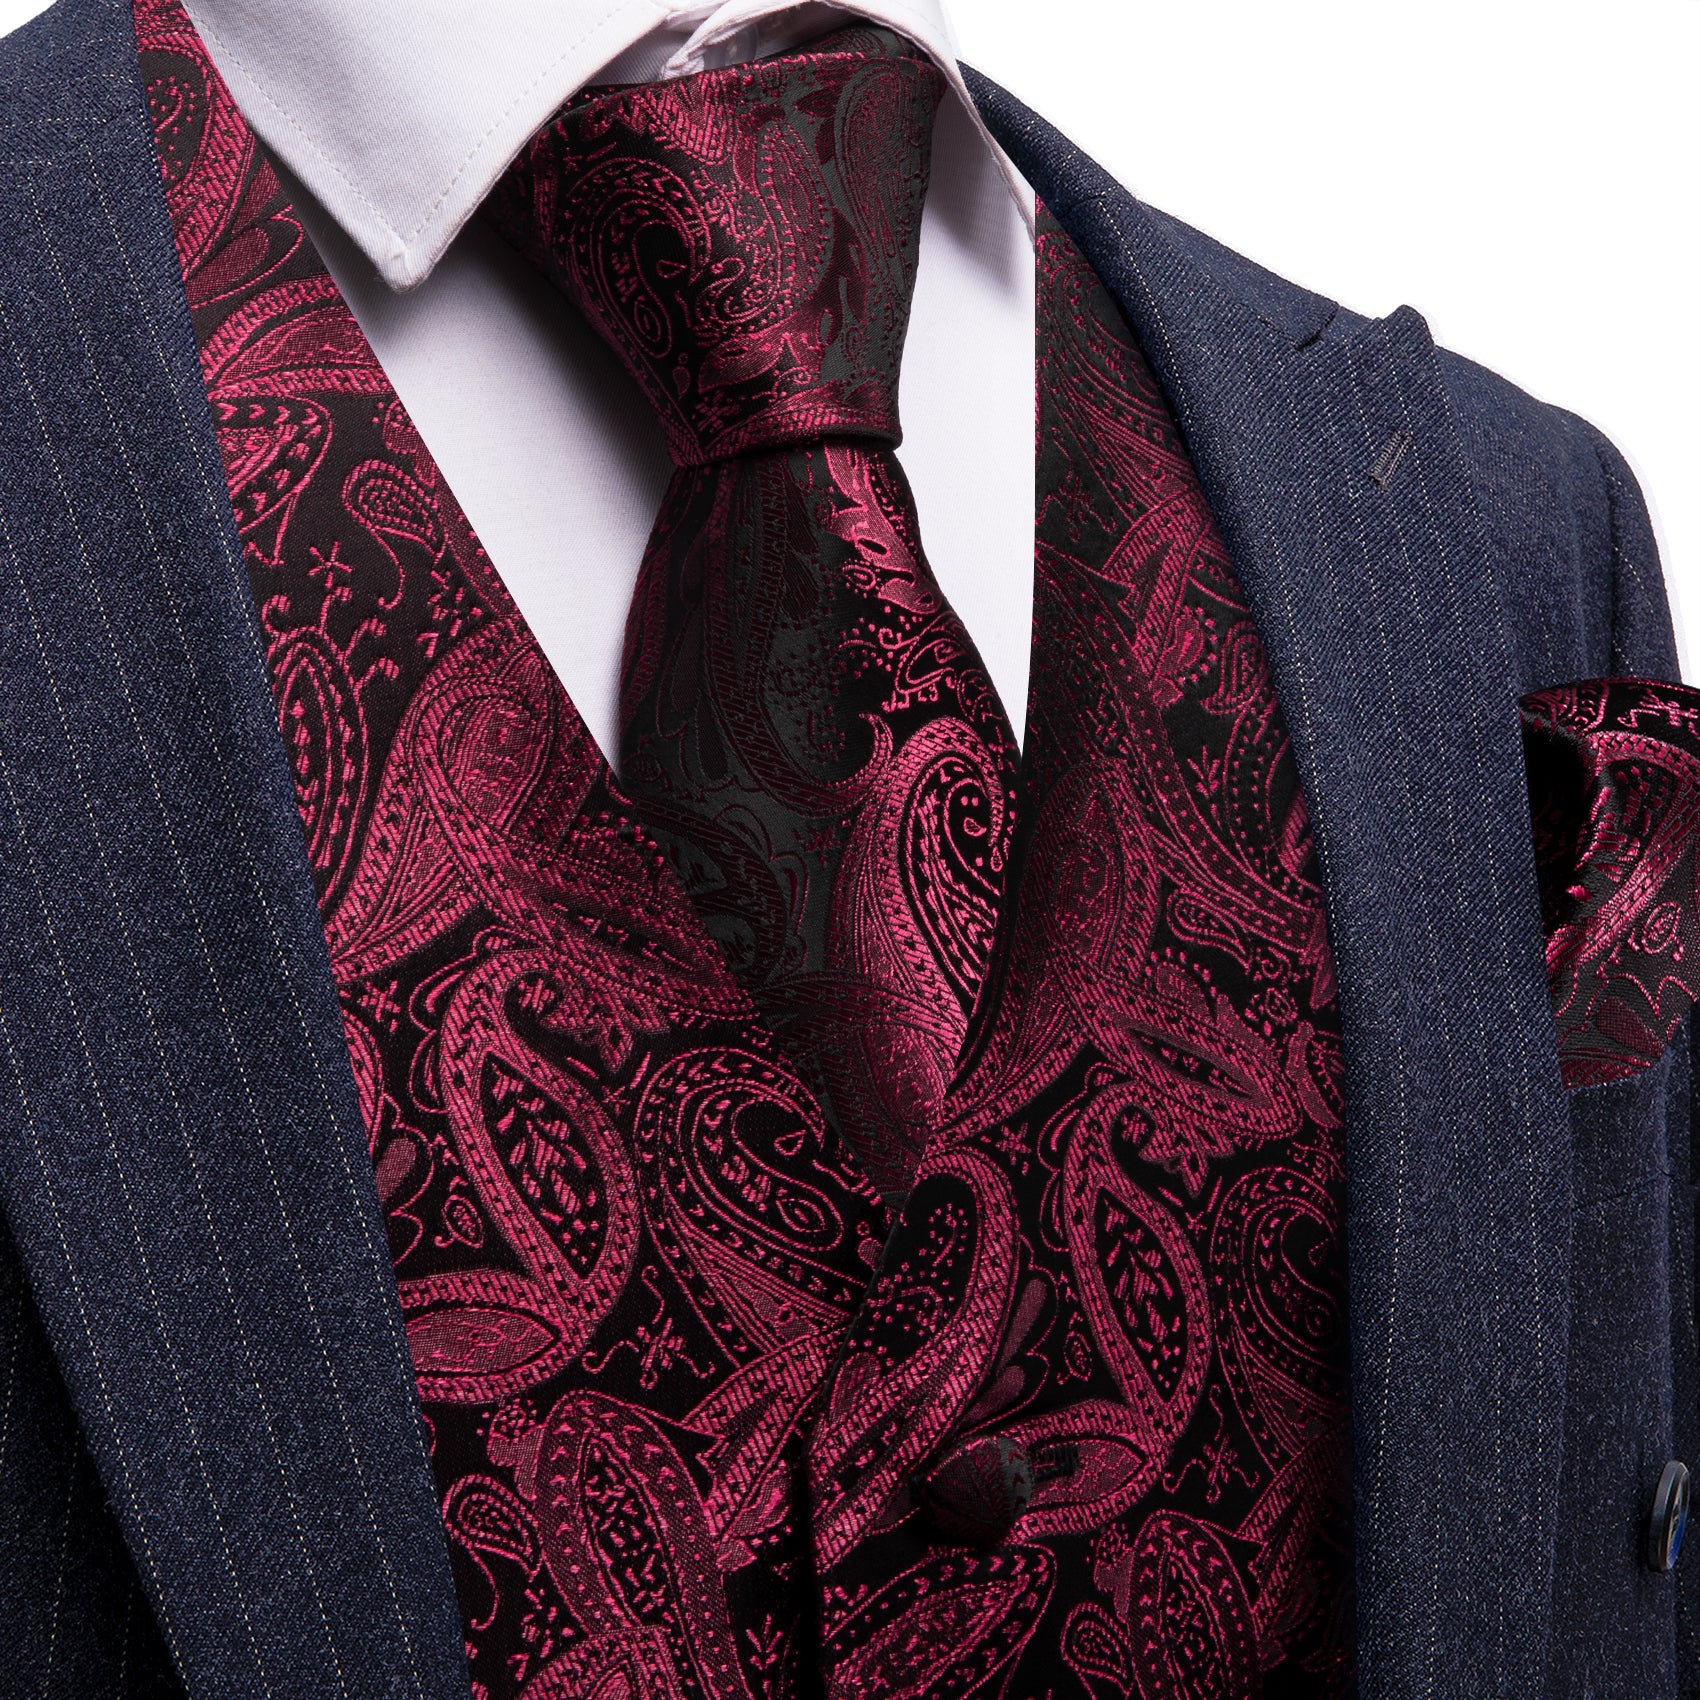 maroon ties and vest set